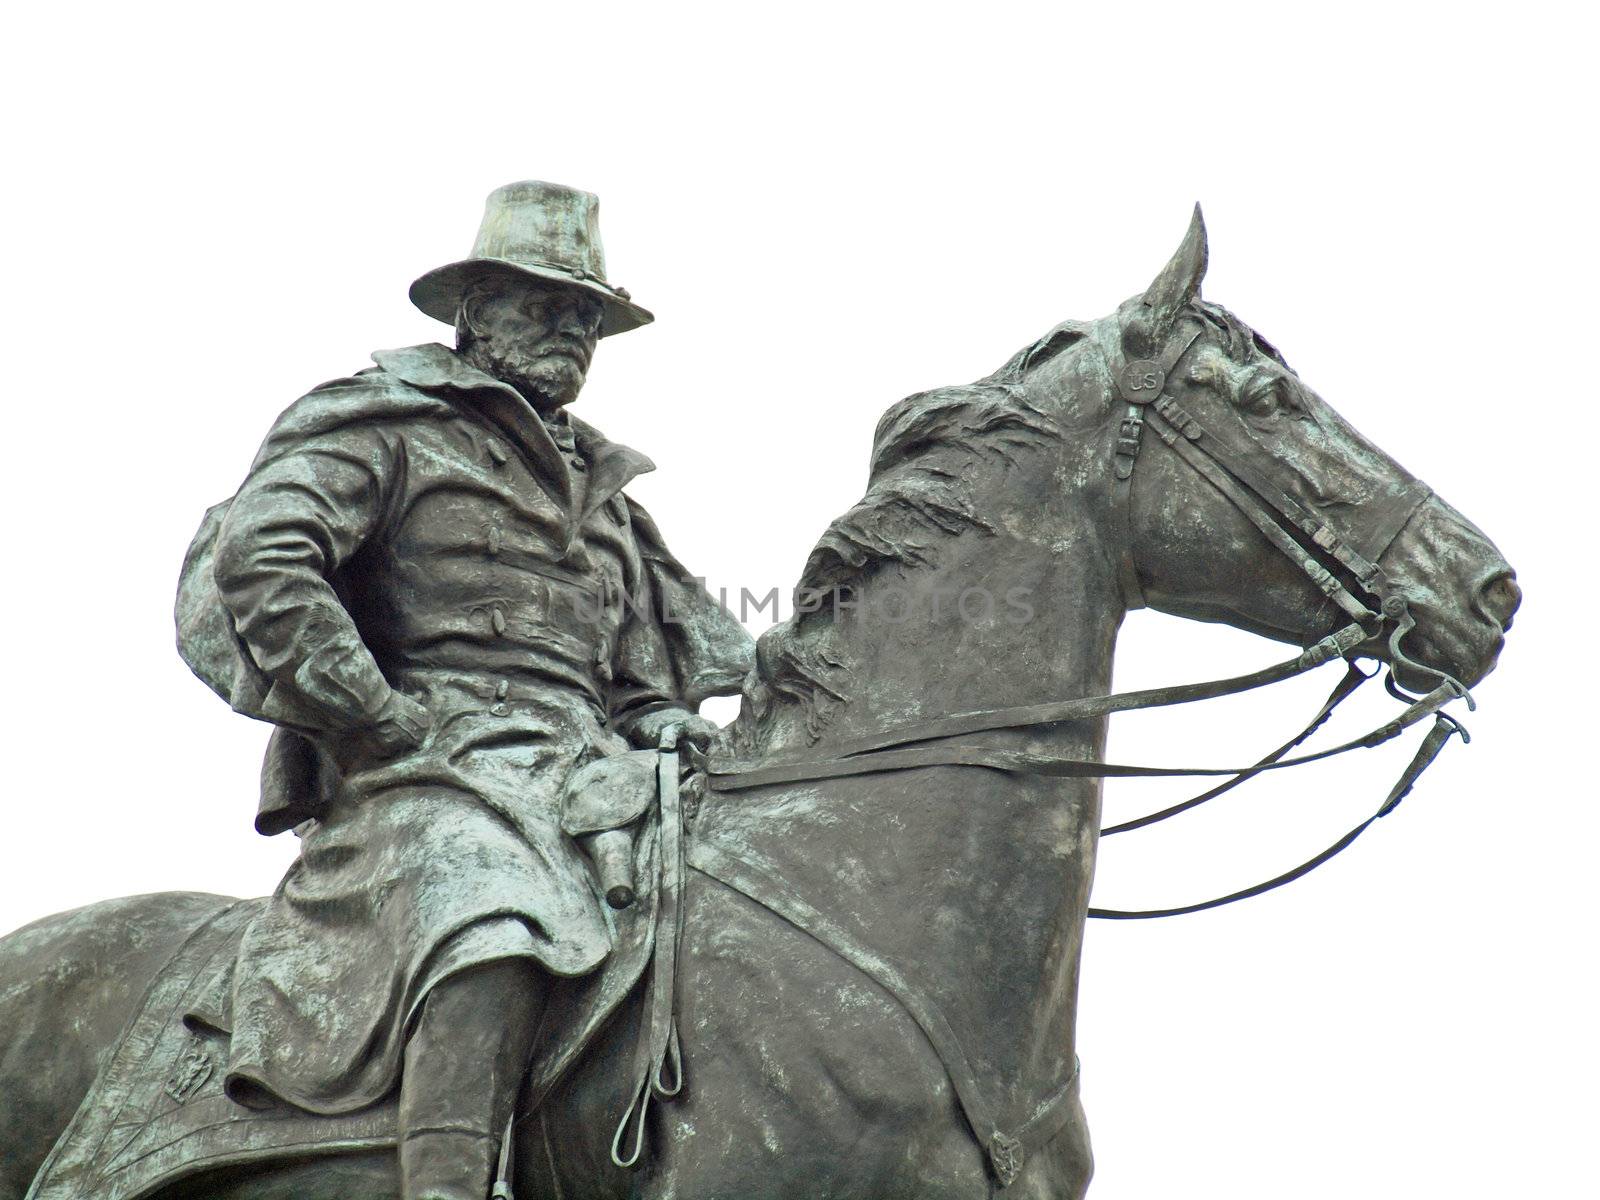 Ulysses S. Grant Memorial Statue at the U.S. Capitol Building in Washington DC